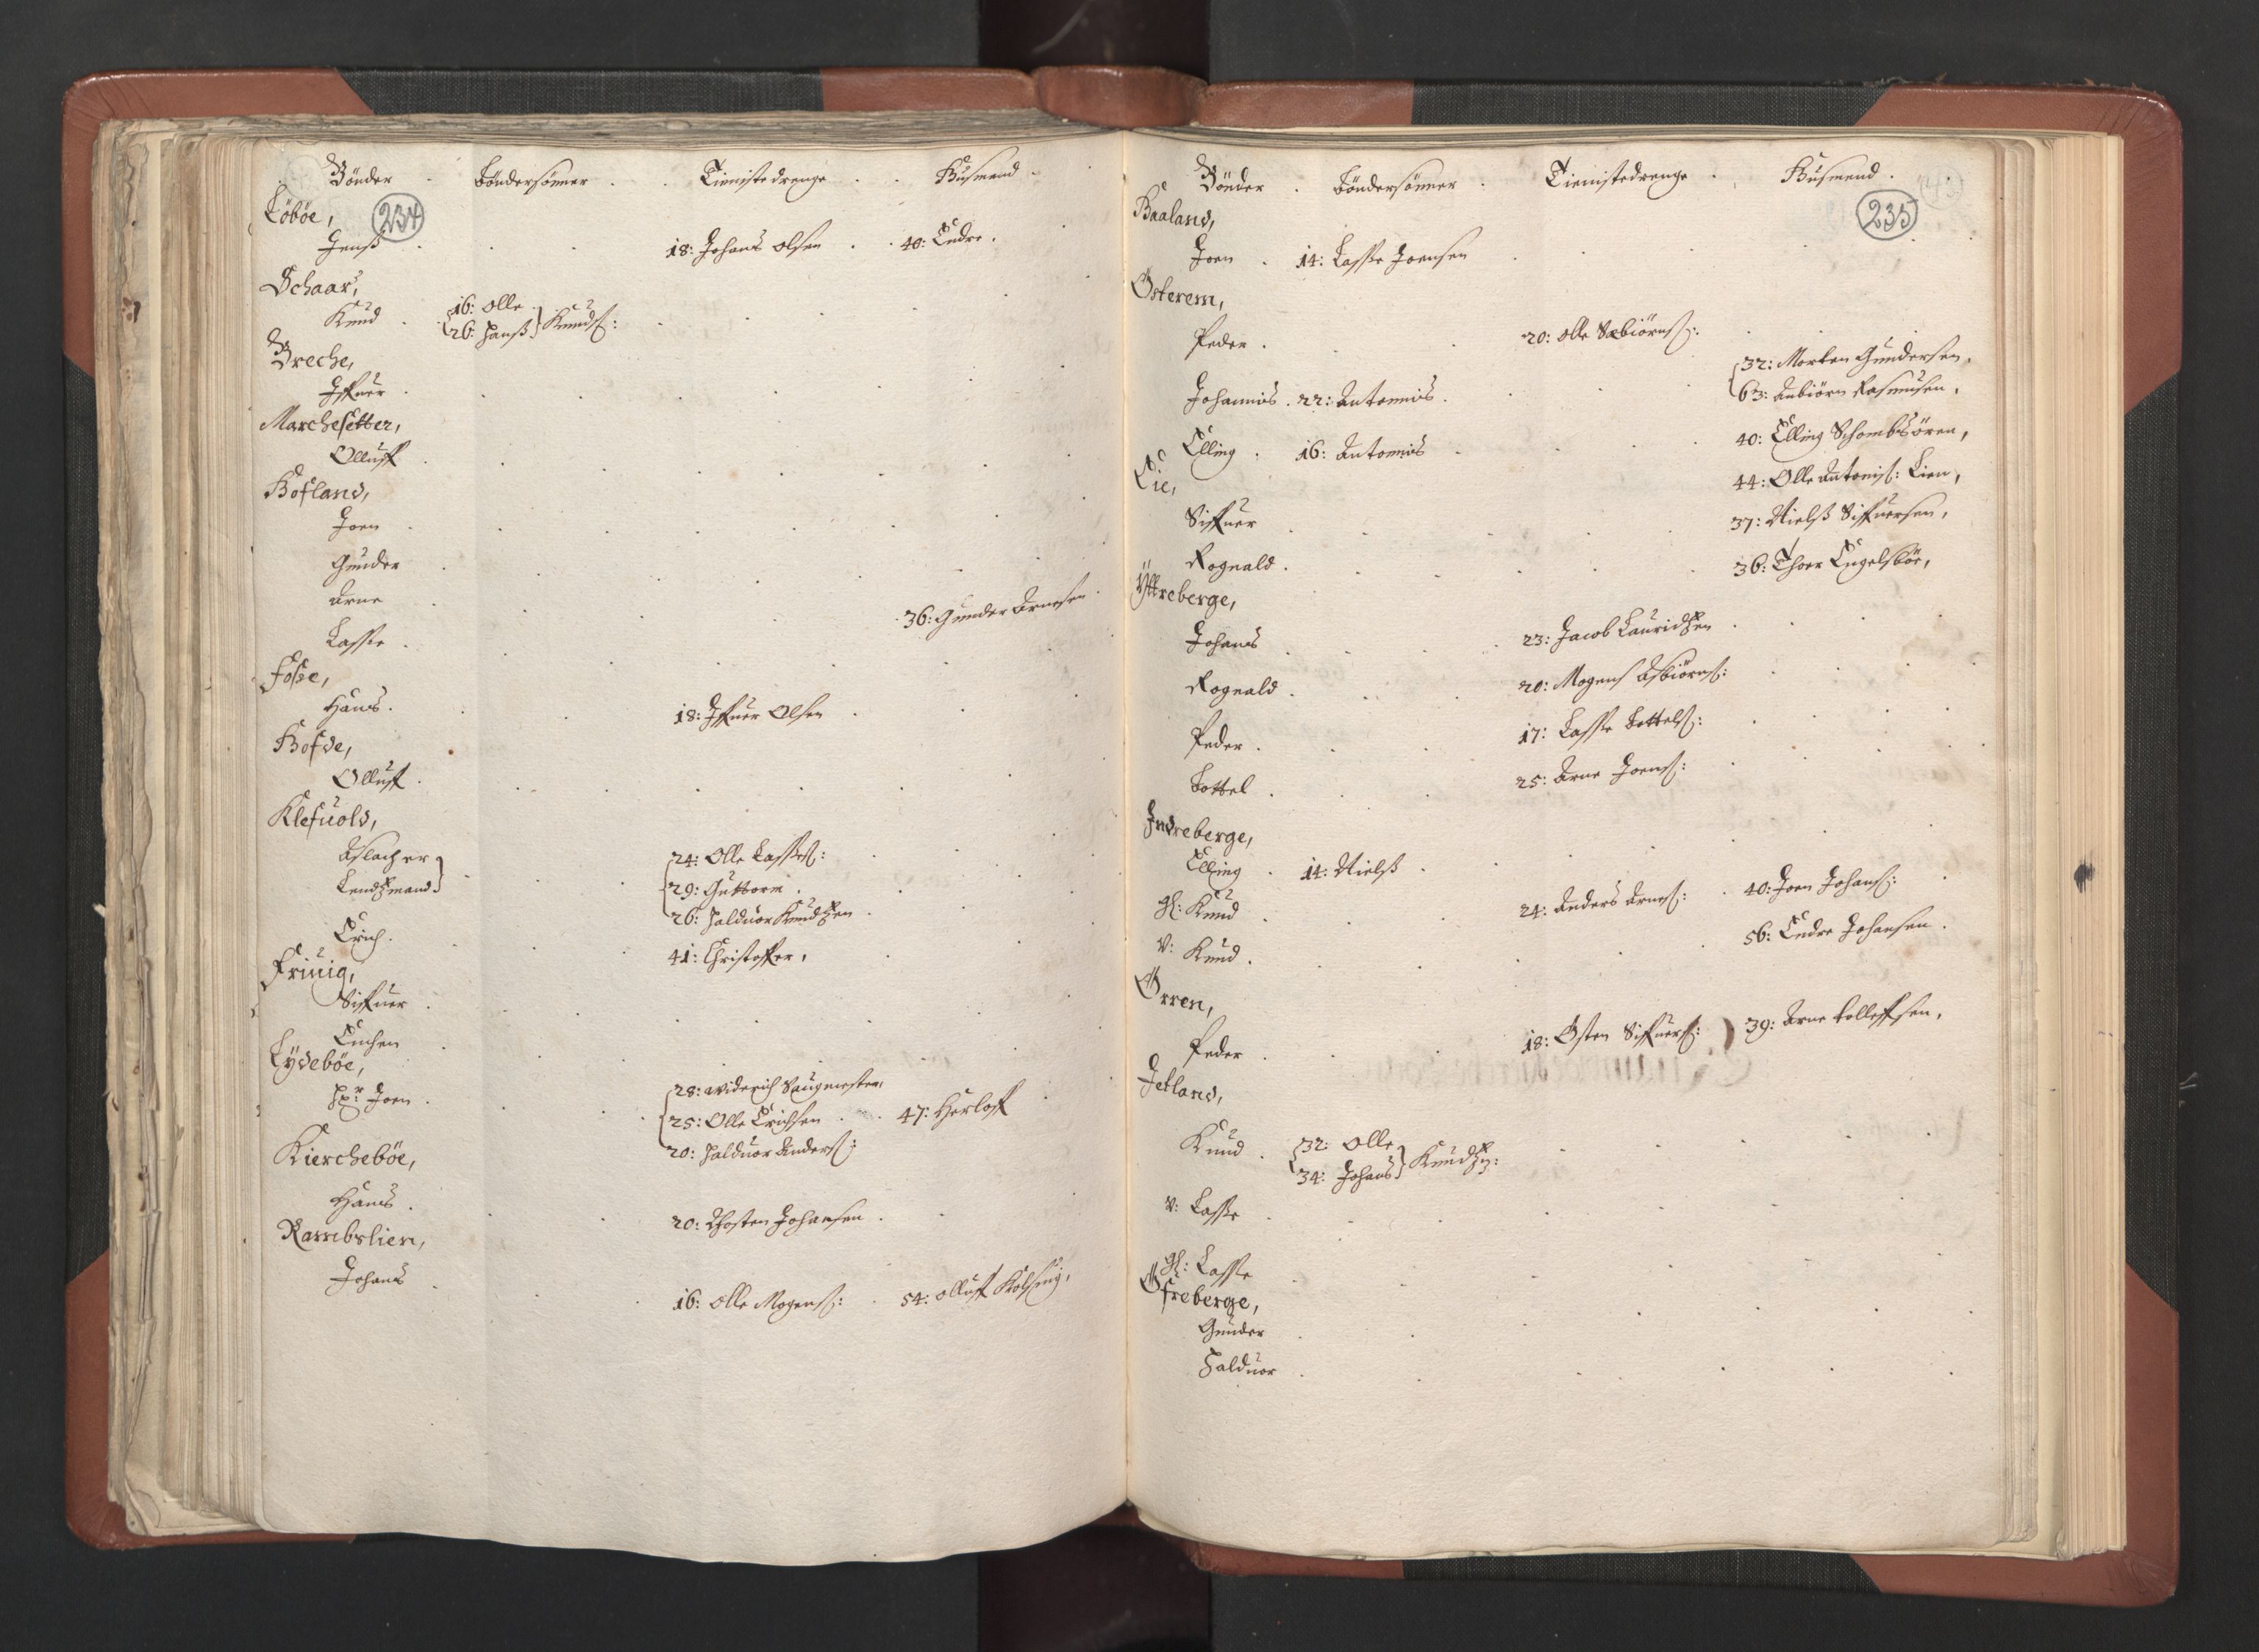 RA, Fogdenes og sorenskrivernes manntall 1664-1666, nr. 14: Hardanger len, Ytre Sogn fogderi og Indre Sogn fogderi, 1664-1665, s. 234-235